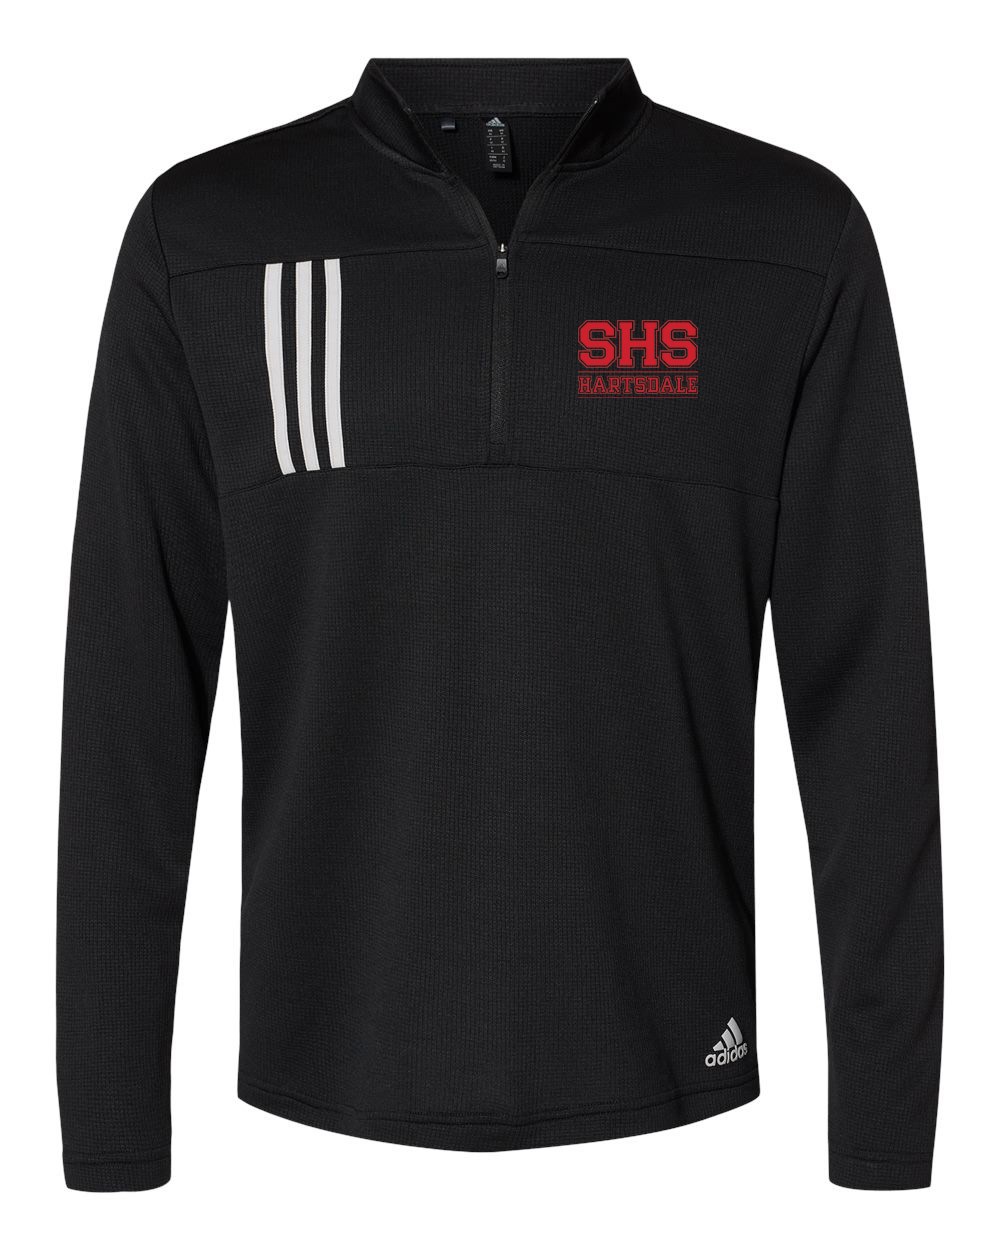 SHS Spirit Adidas 3 Stripe Men's Quarter Zip w/ SHS Logo - Please Allow 2-3 Weeks for Delivery